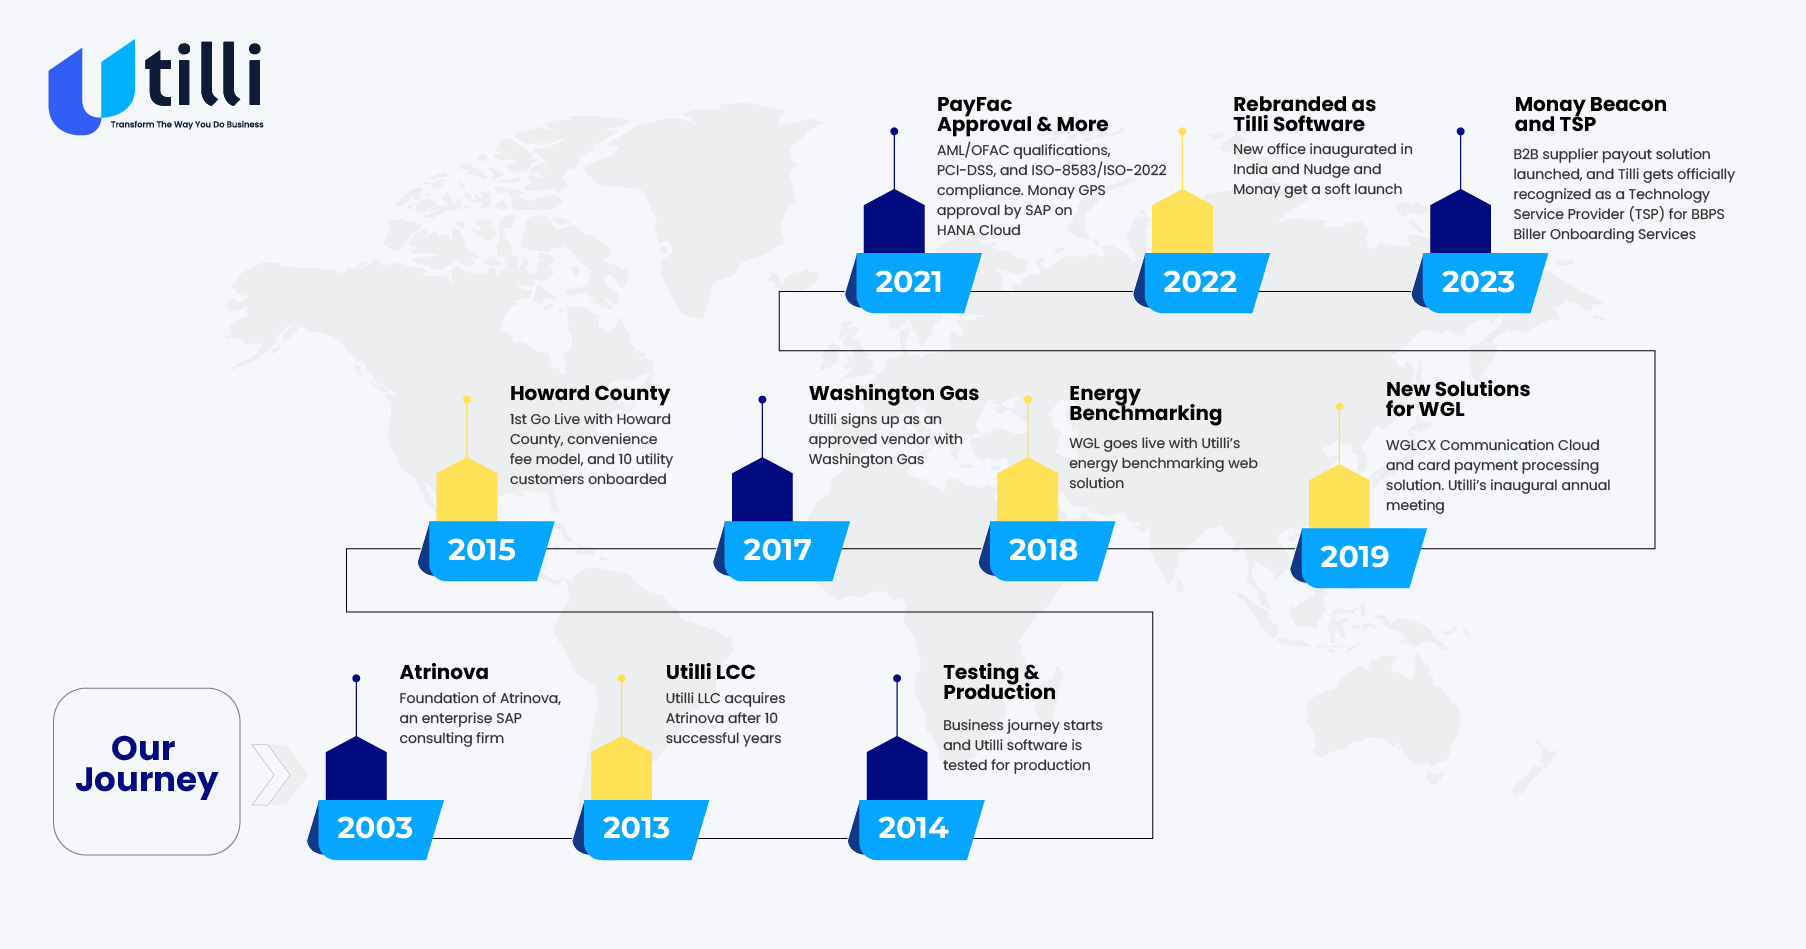 Tilli Company's Journey Infographic: A visual representation of Tilli Company's evolution and milestones